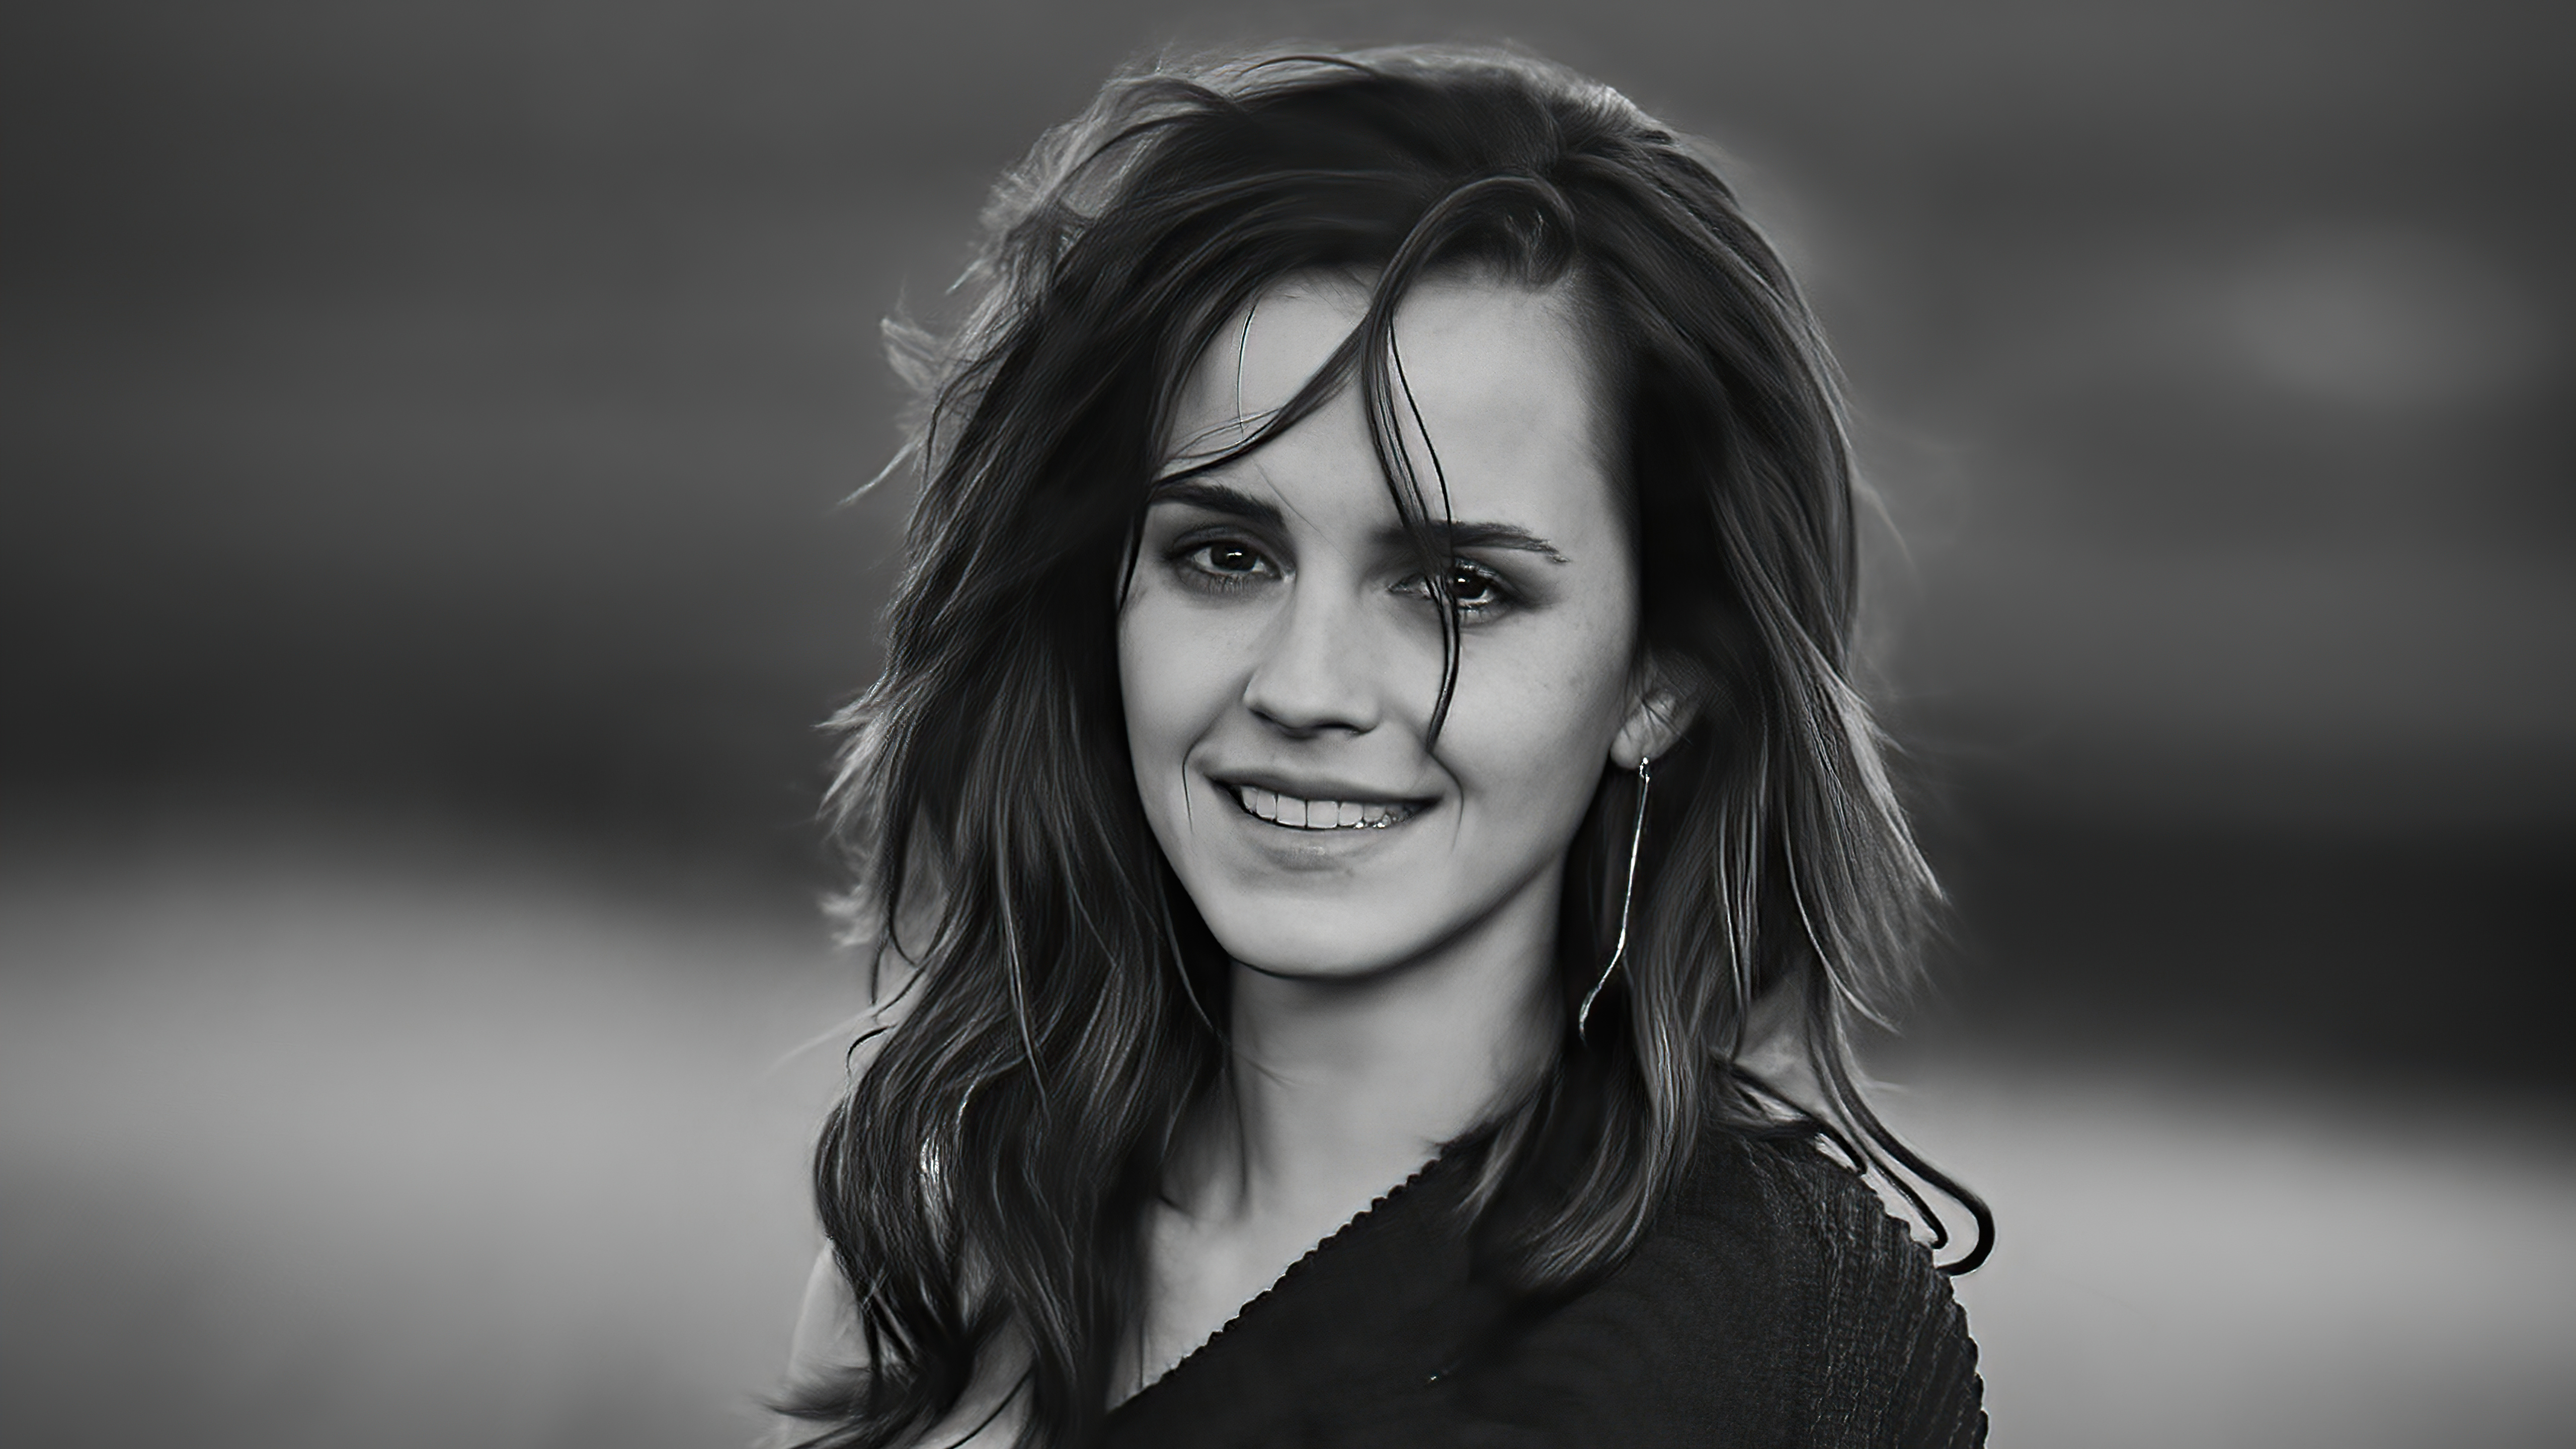 Emma Watson Monochrome 5k, HD Celebrities, 4k Wallpaper, Image, Background, Photo and Picture